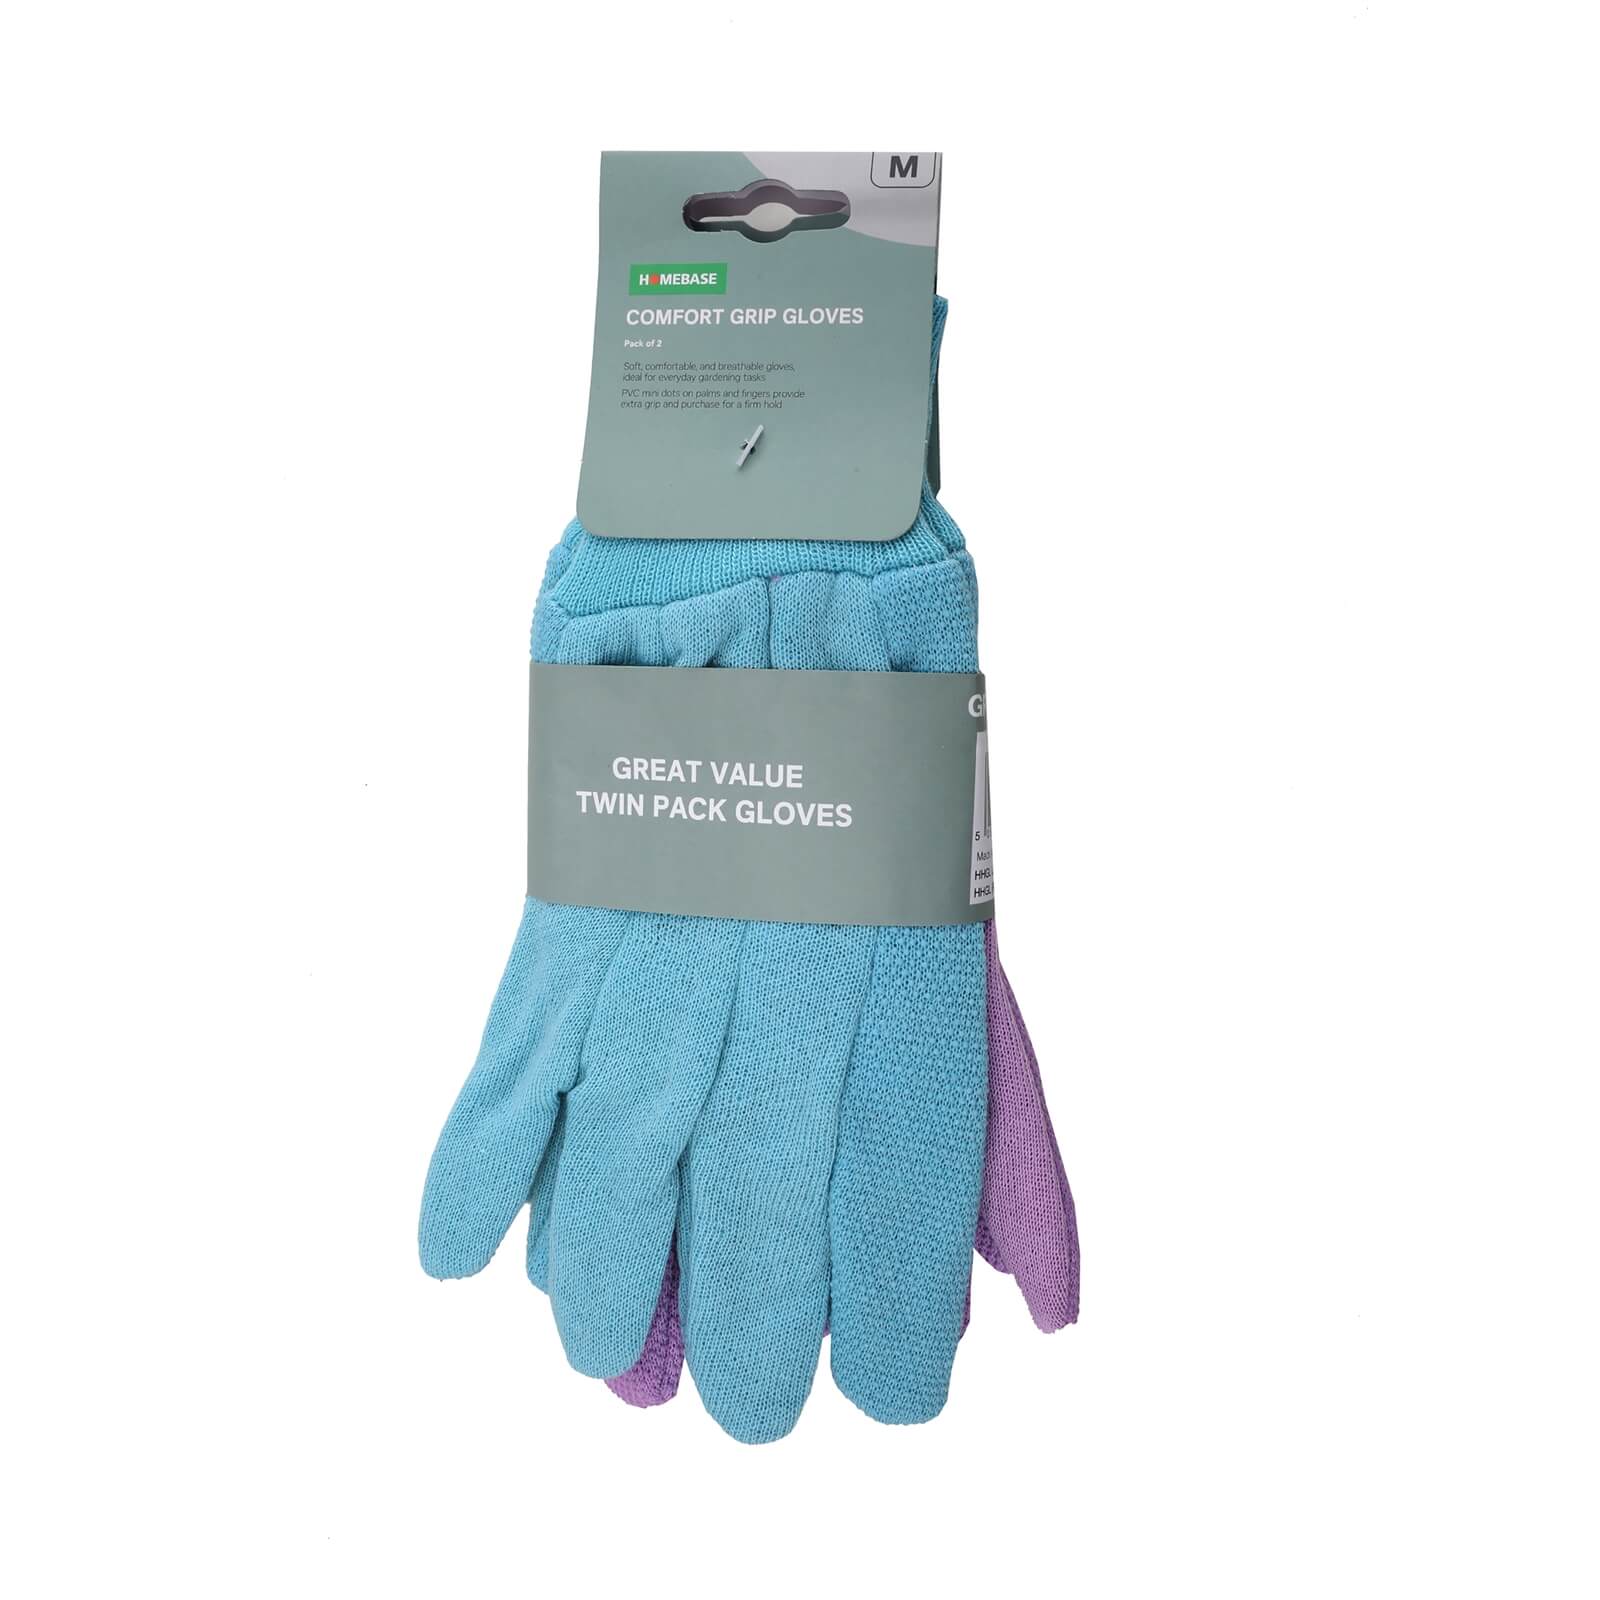 Photo of Homebase Comfy Grip Gloves - 2 Pack - Medium